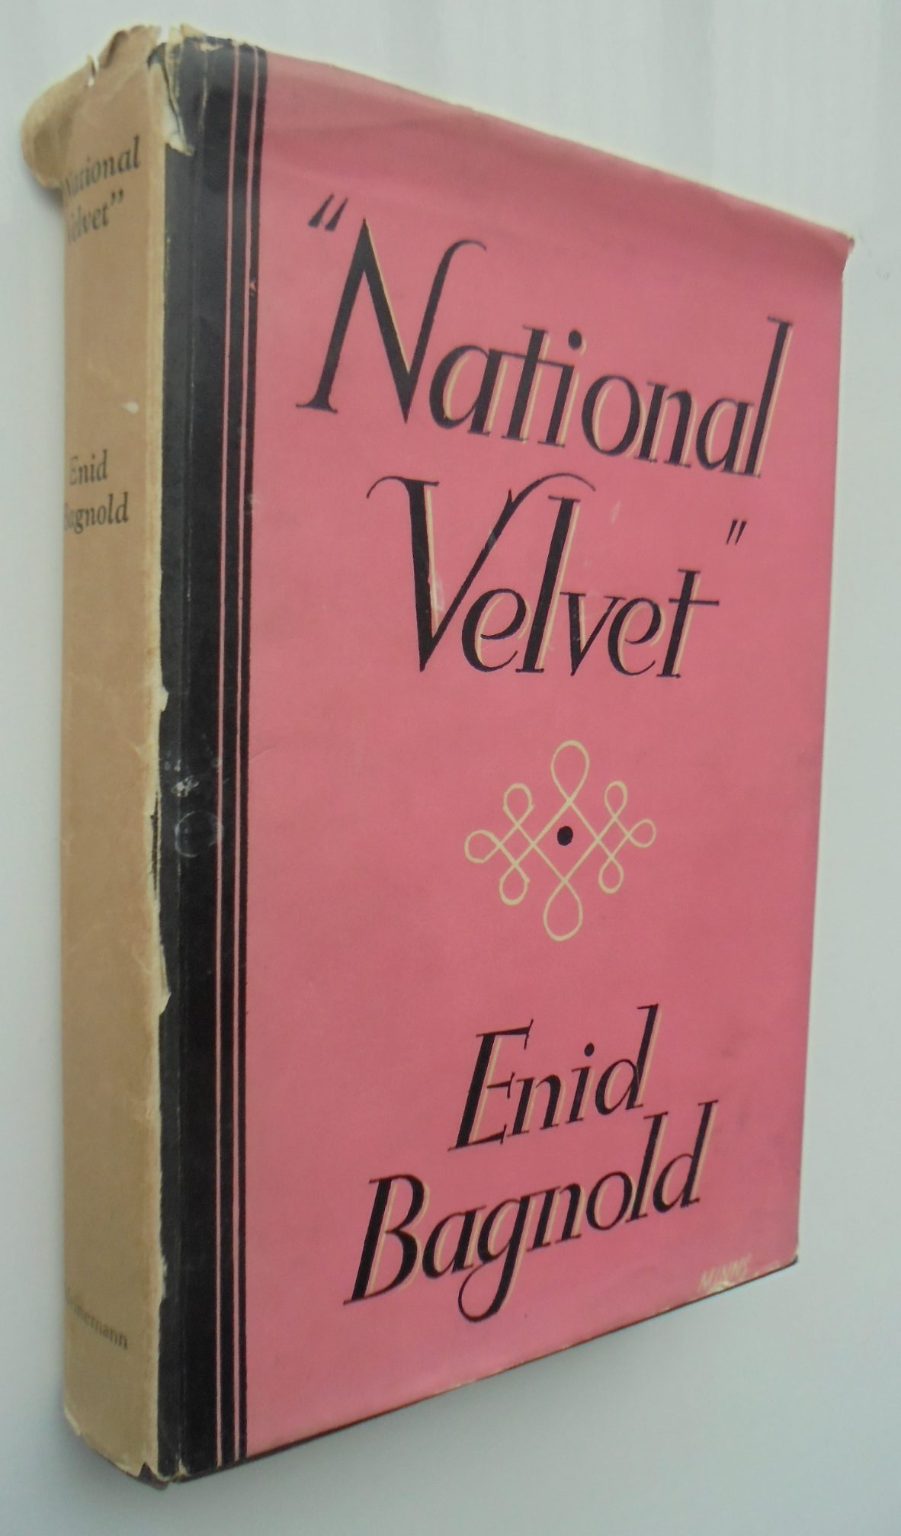 National Velvet. (1958). By Enid Bagnold